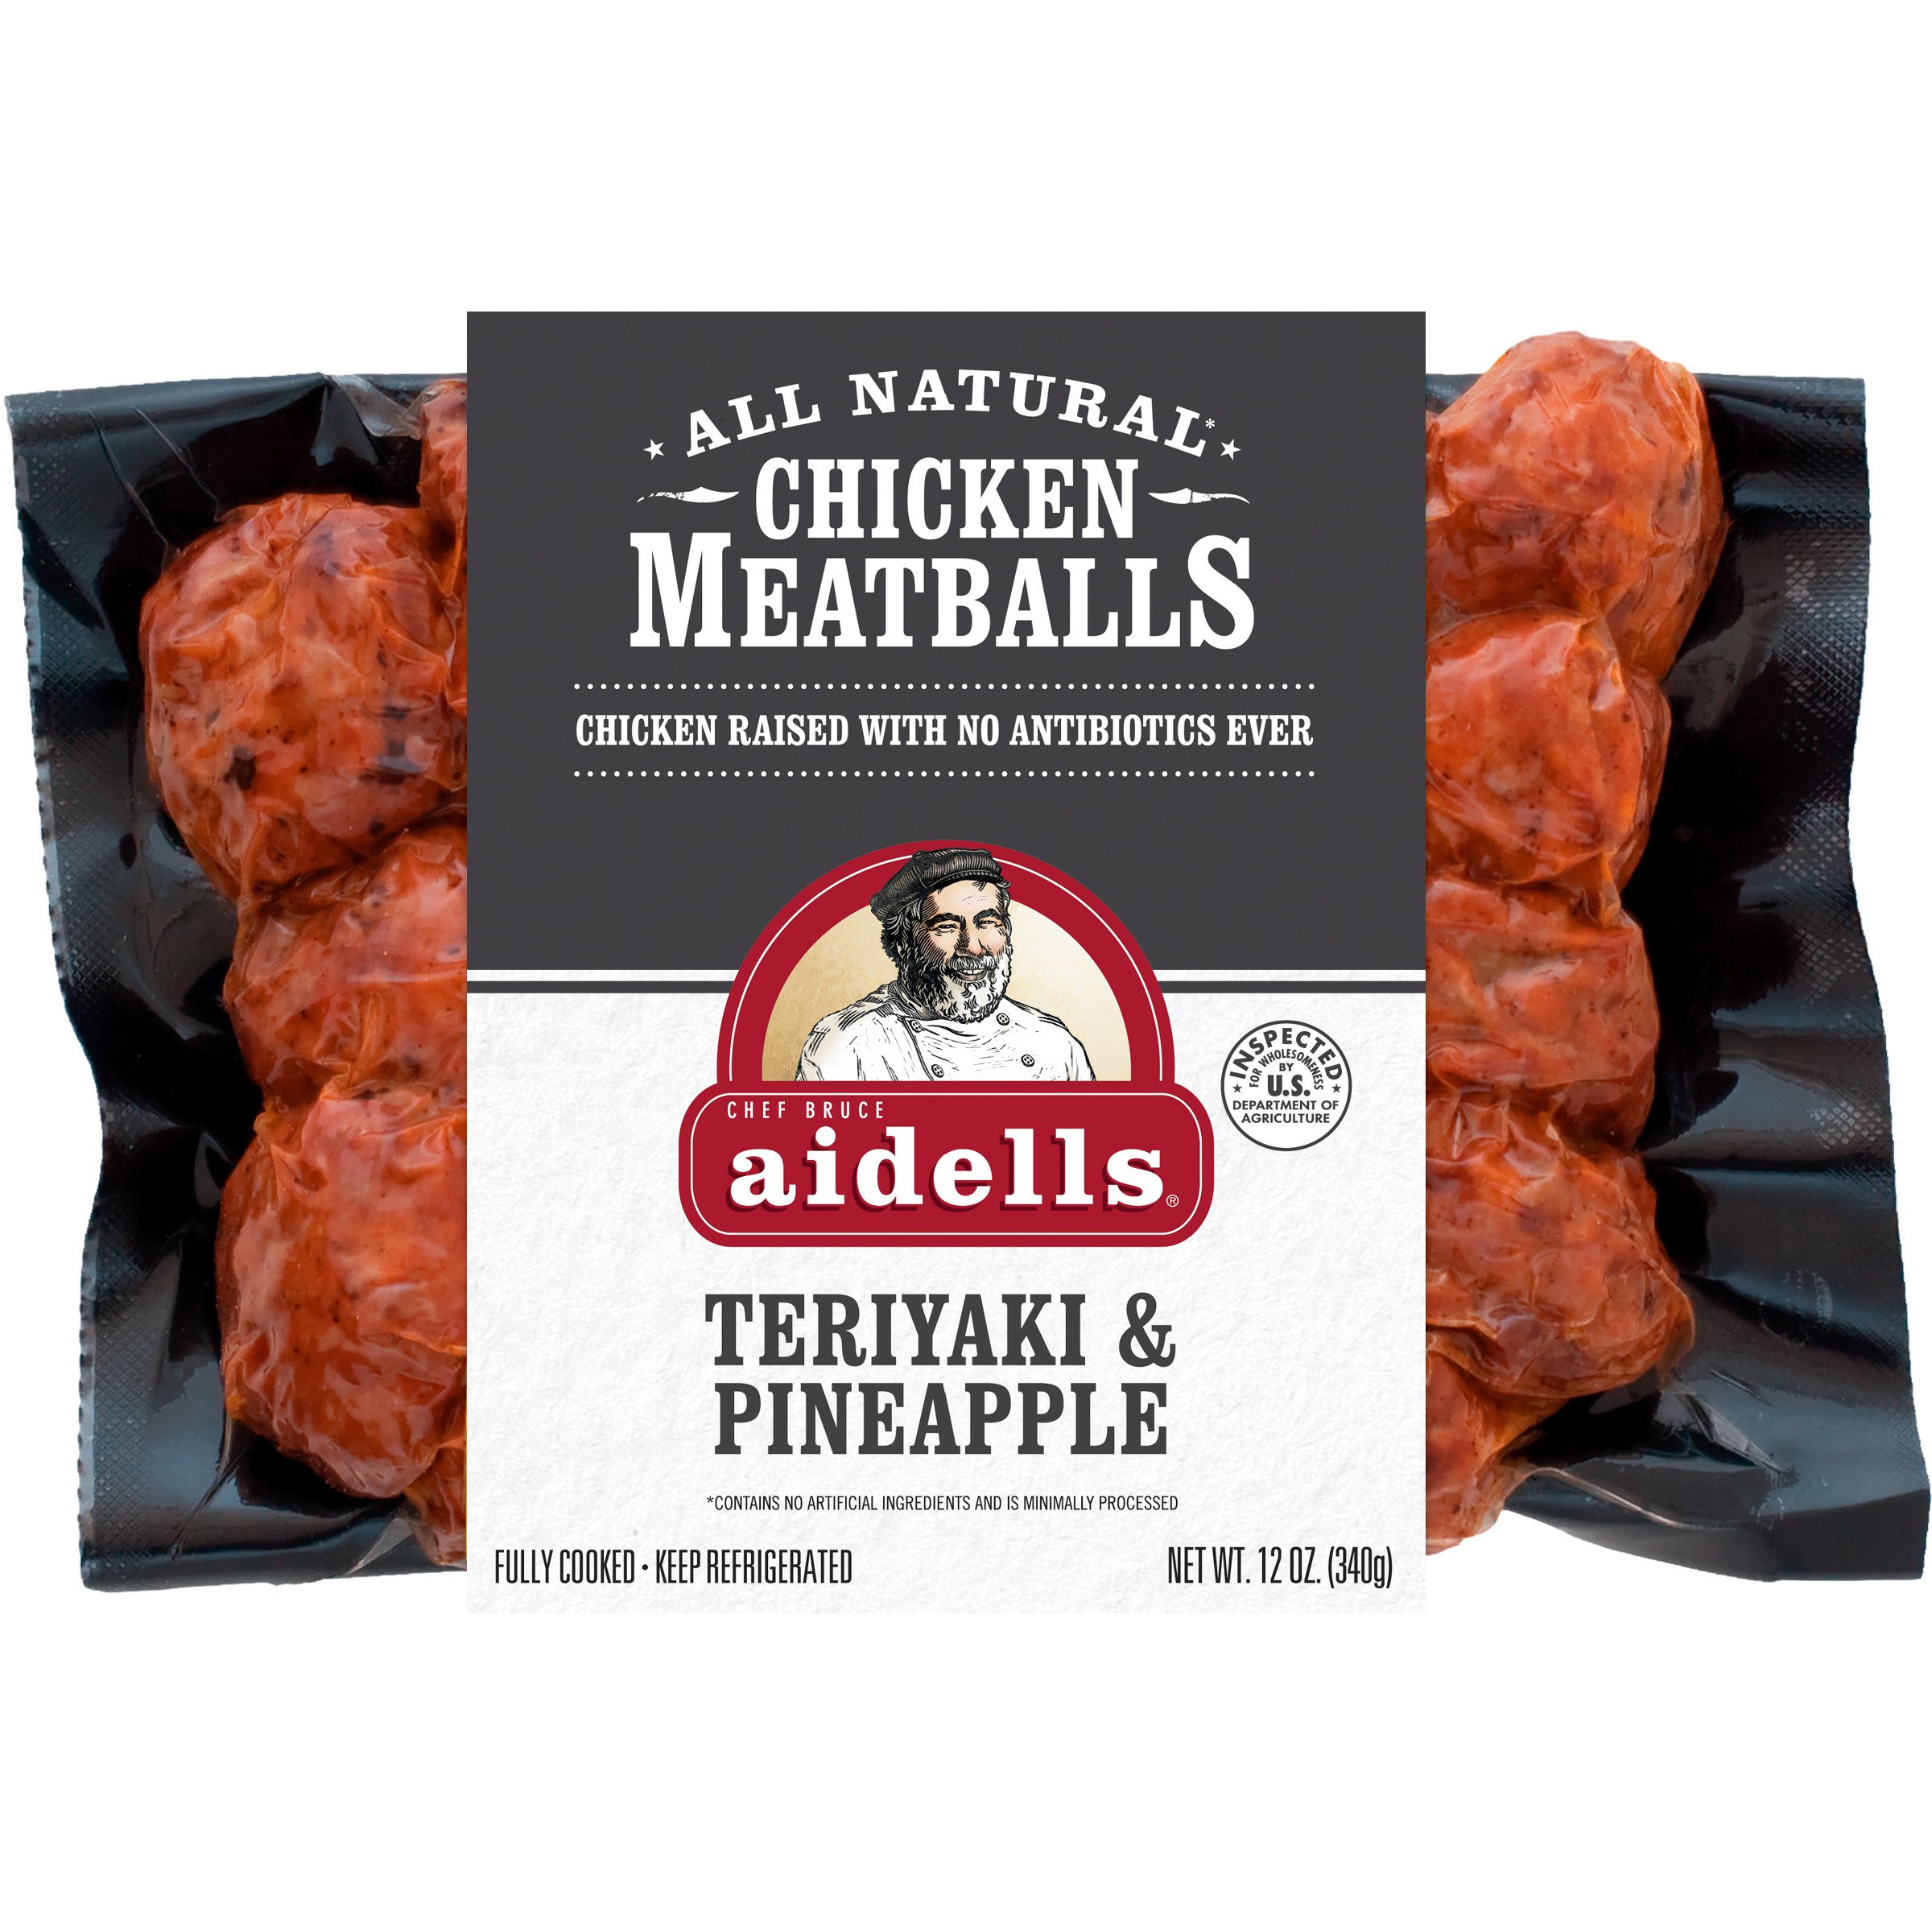 Aidells Chicken Meatballs, Teriyaki & Pineapple - Shop Chicken at H-E-B